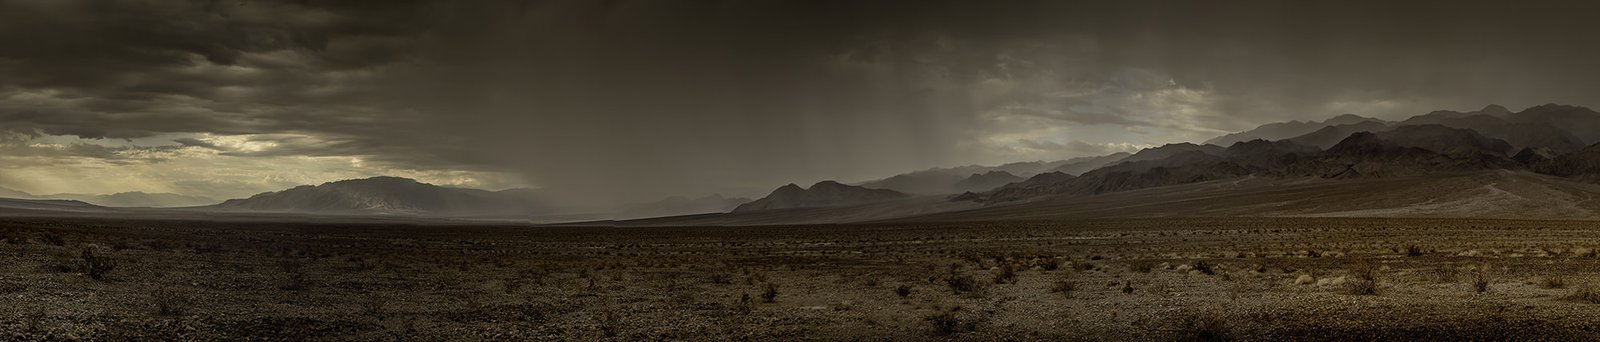 Rain in Death Valley National Park